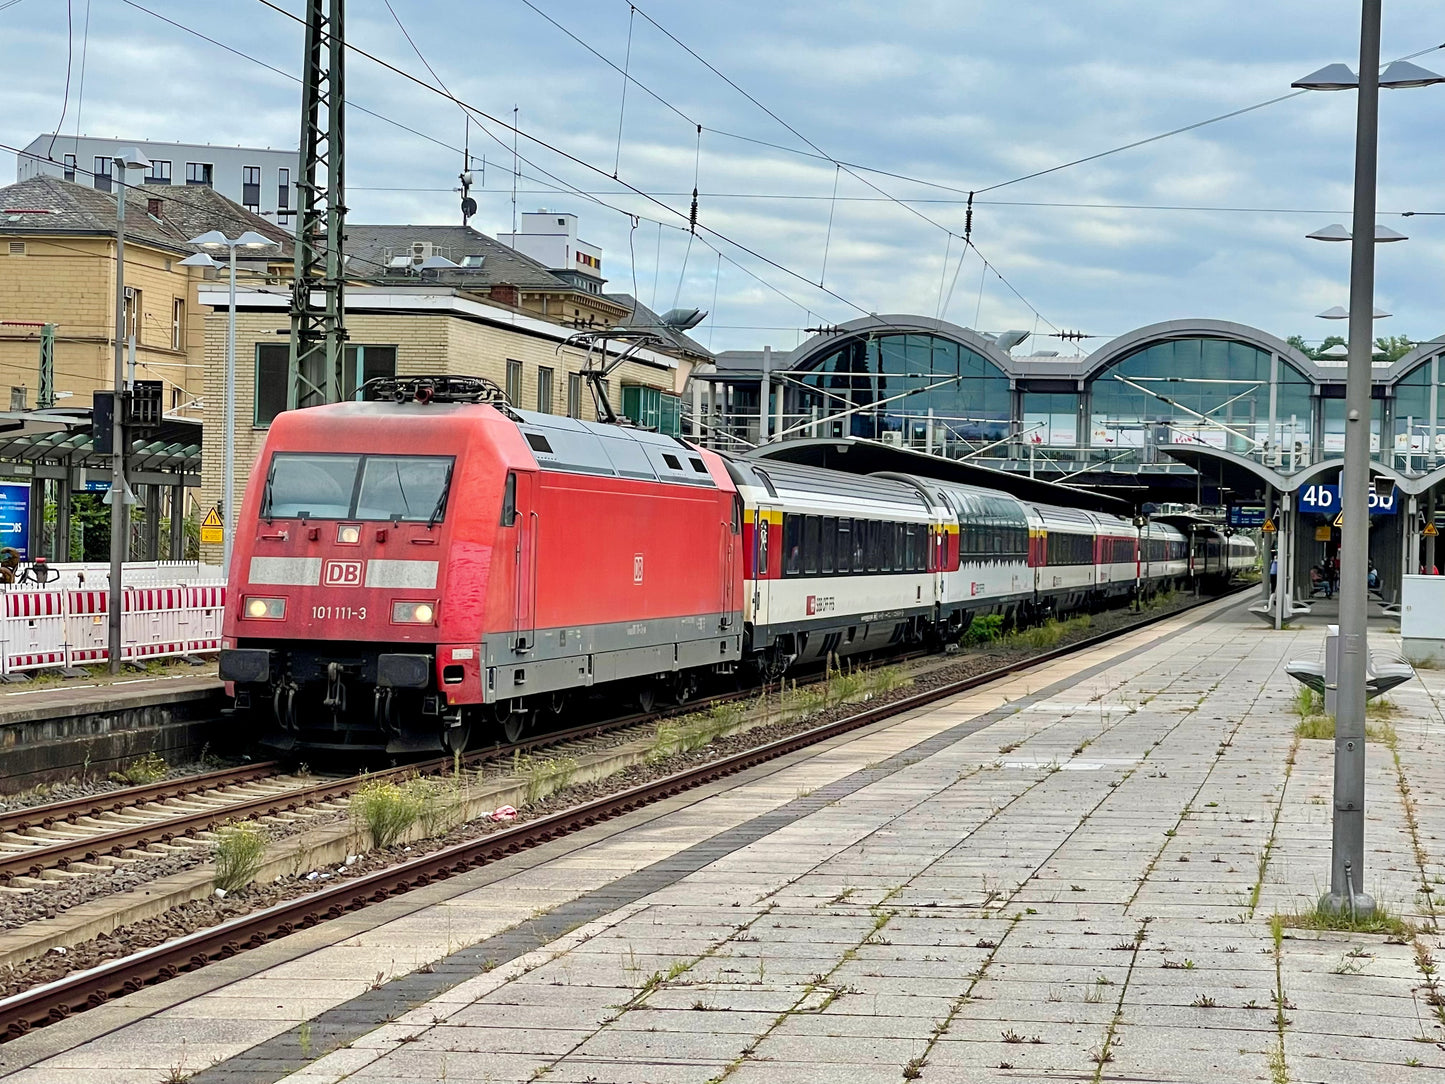 Marklin 43650 - Gotthard Panorama Express Train Passenger Car Set